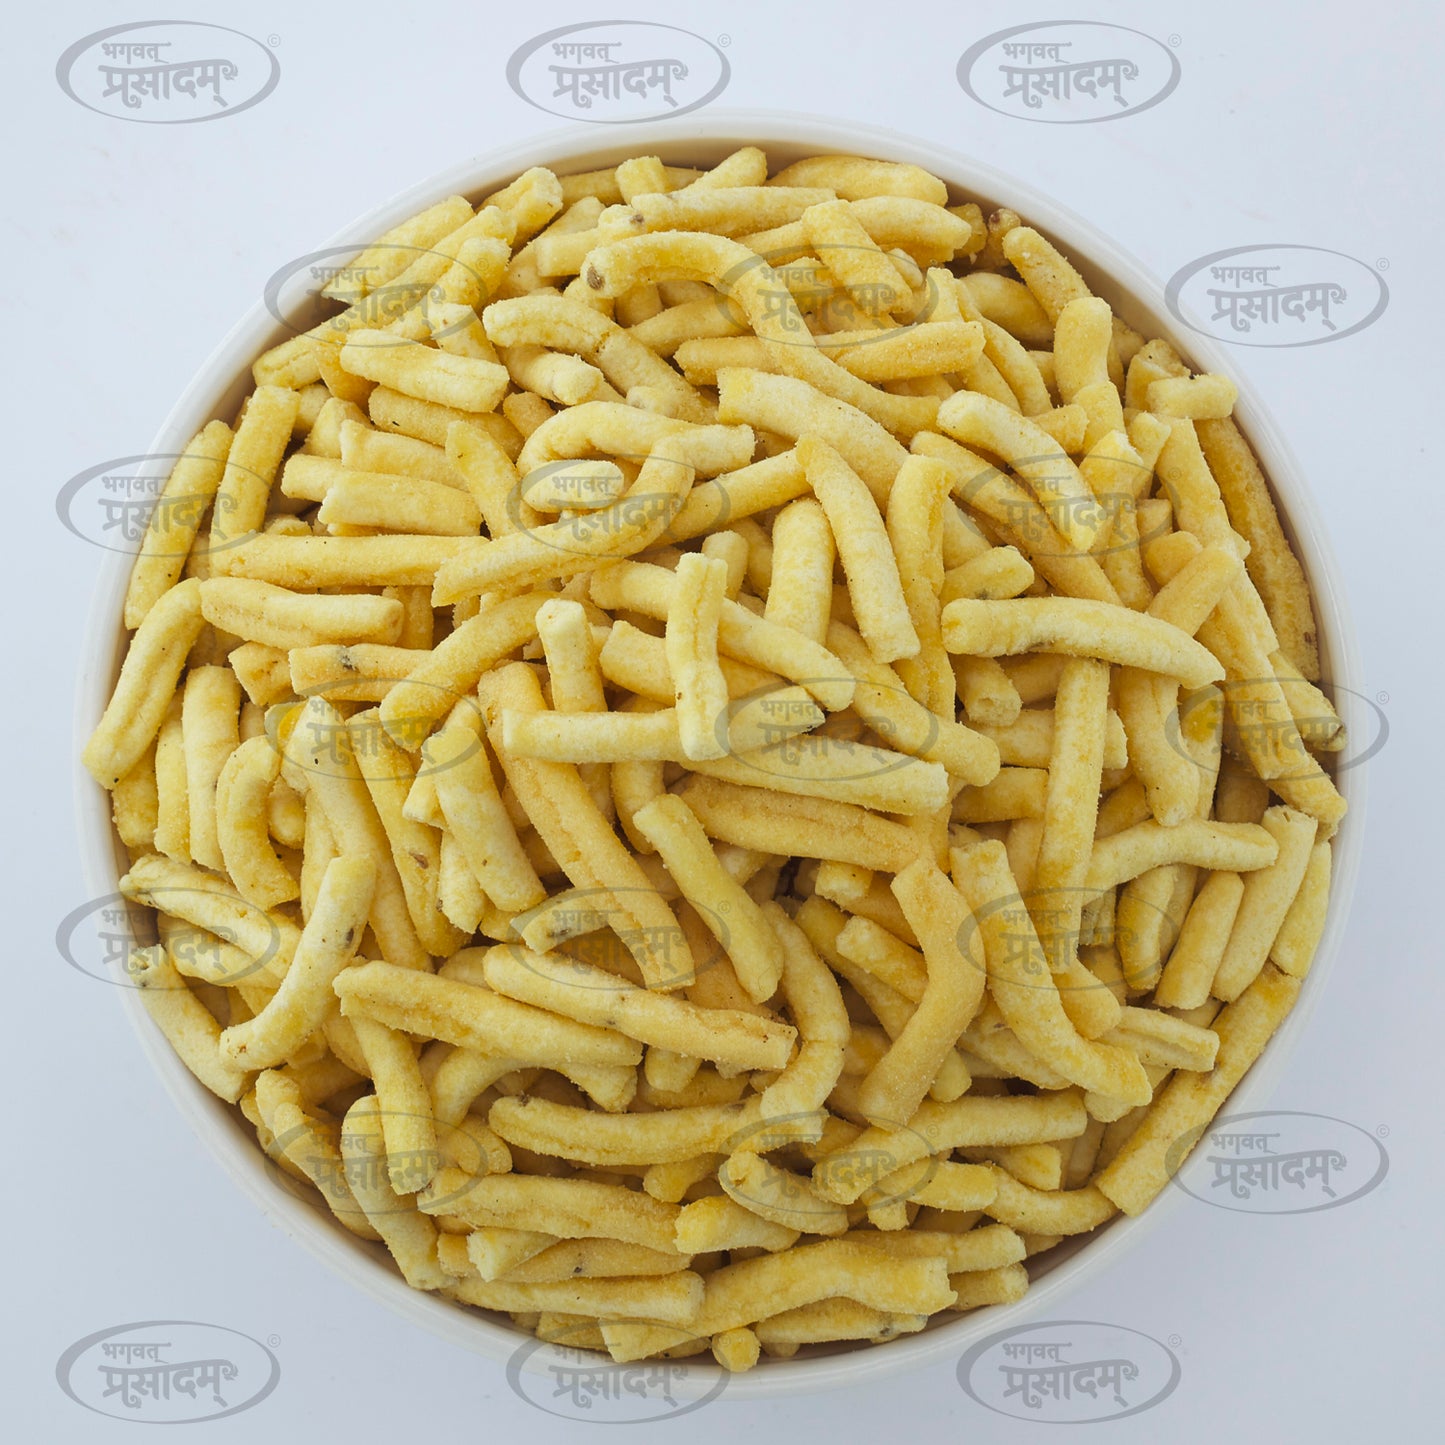 Bhavnagari Gathiya - Crunchy Delight by Bhagvat Prasadam